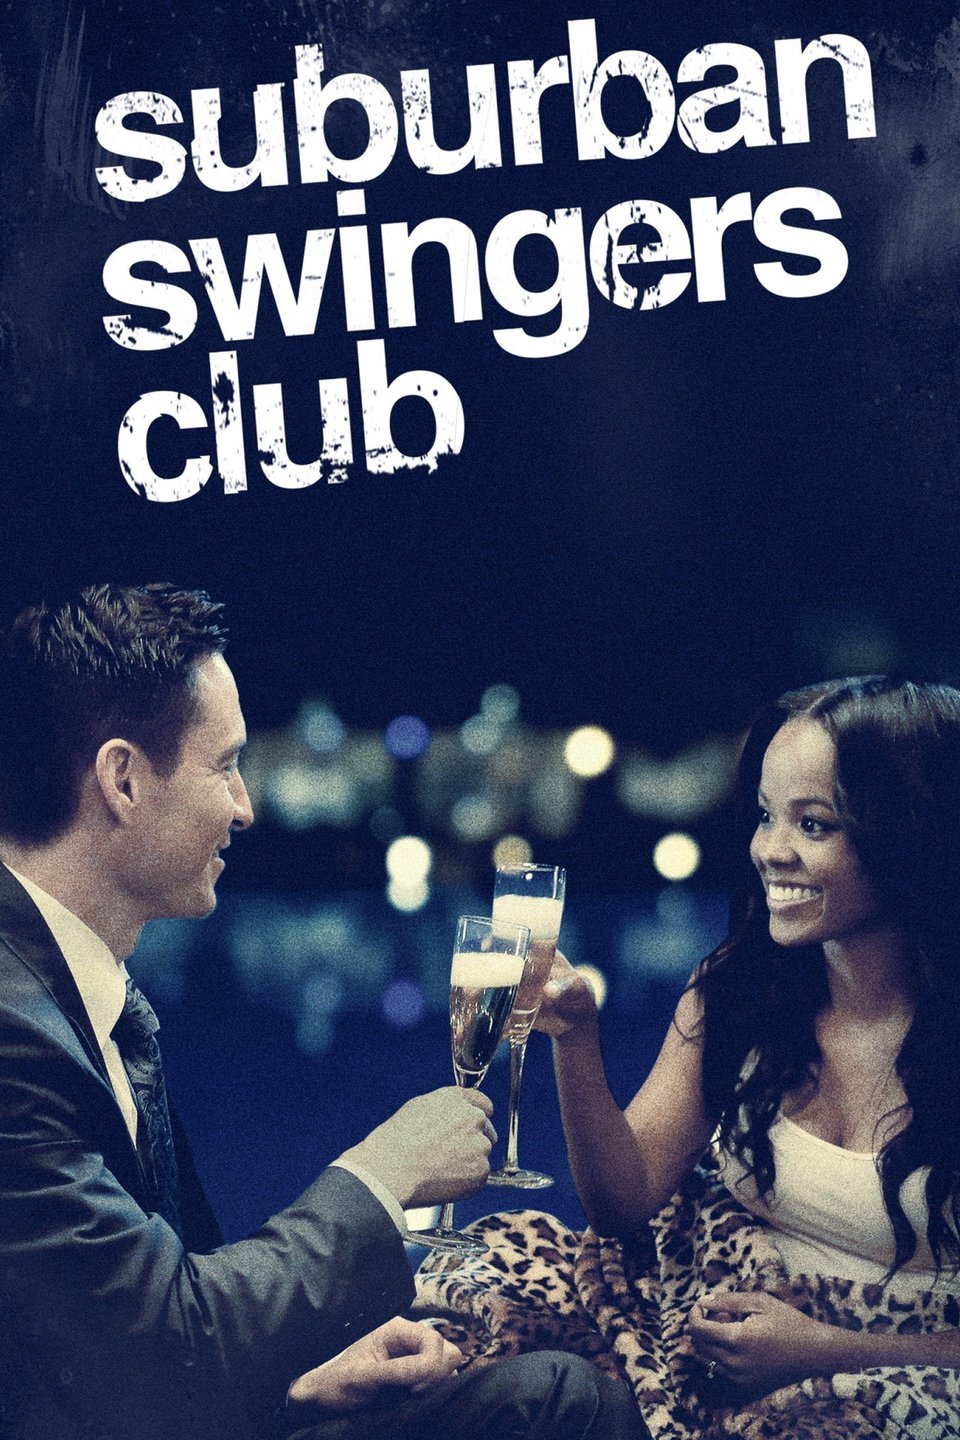 Suburban Swingers Club hq image